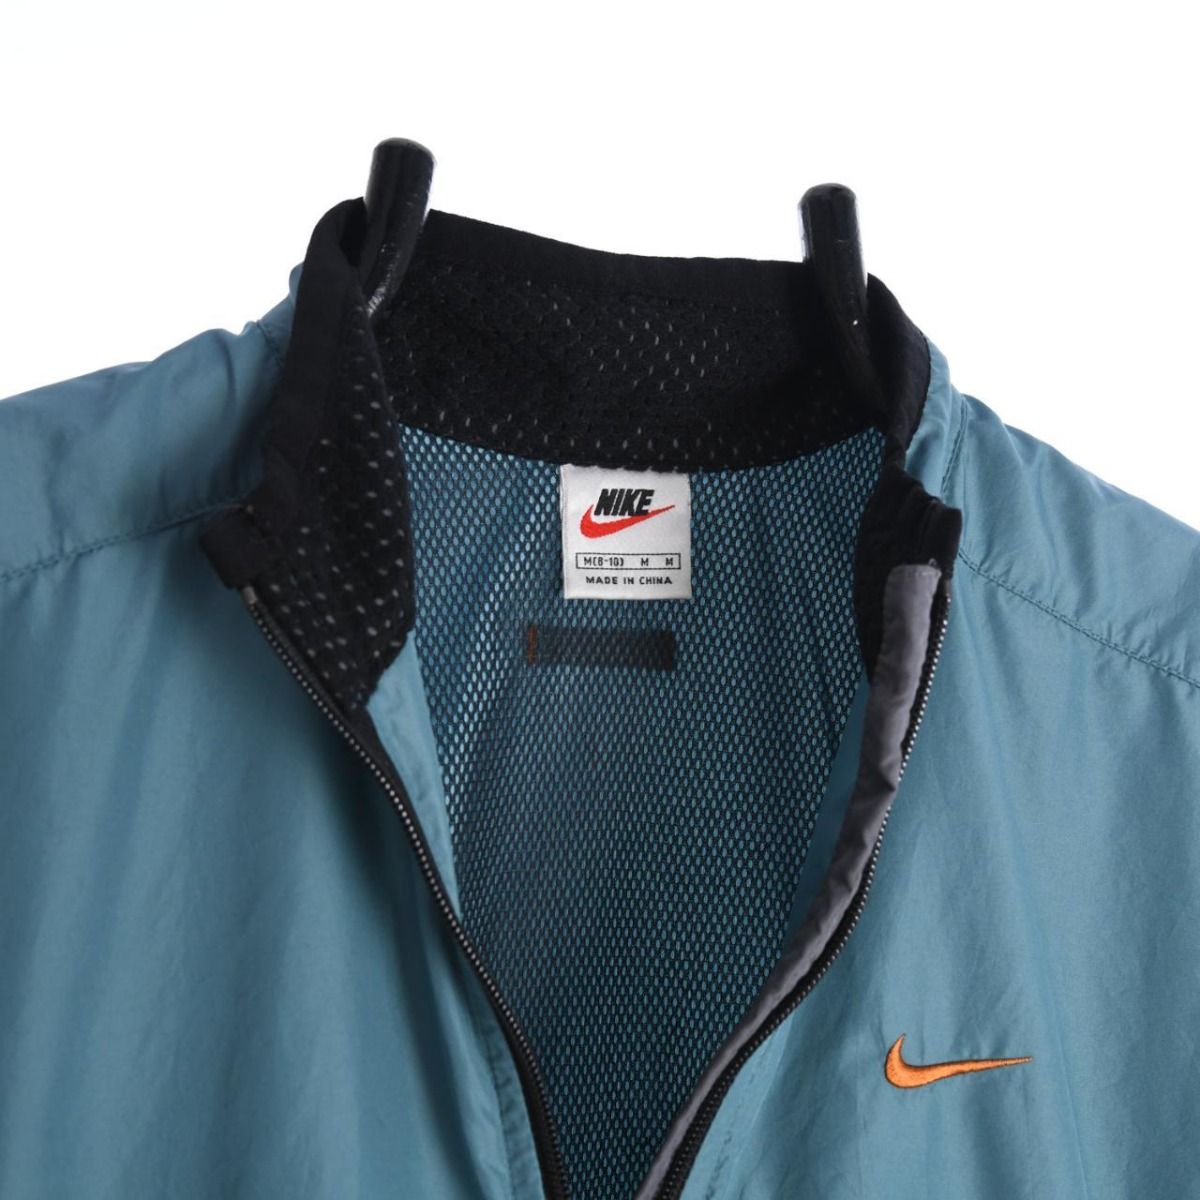 Nike 1990s Technical Shell Jacket